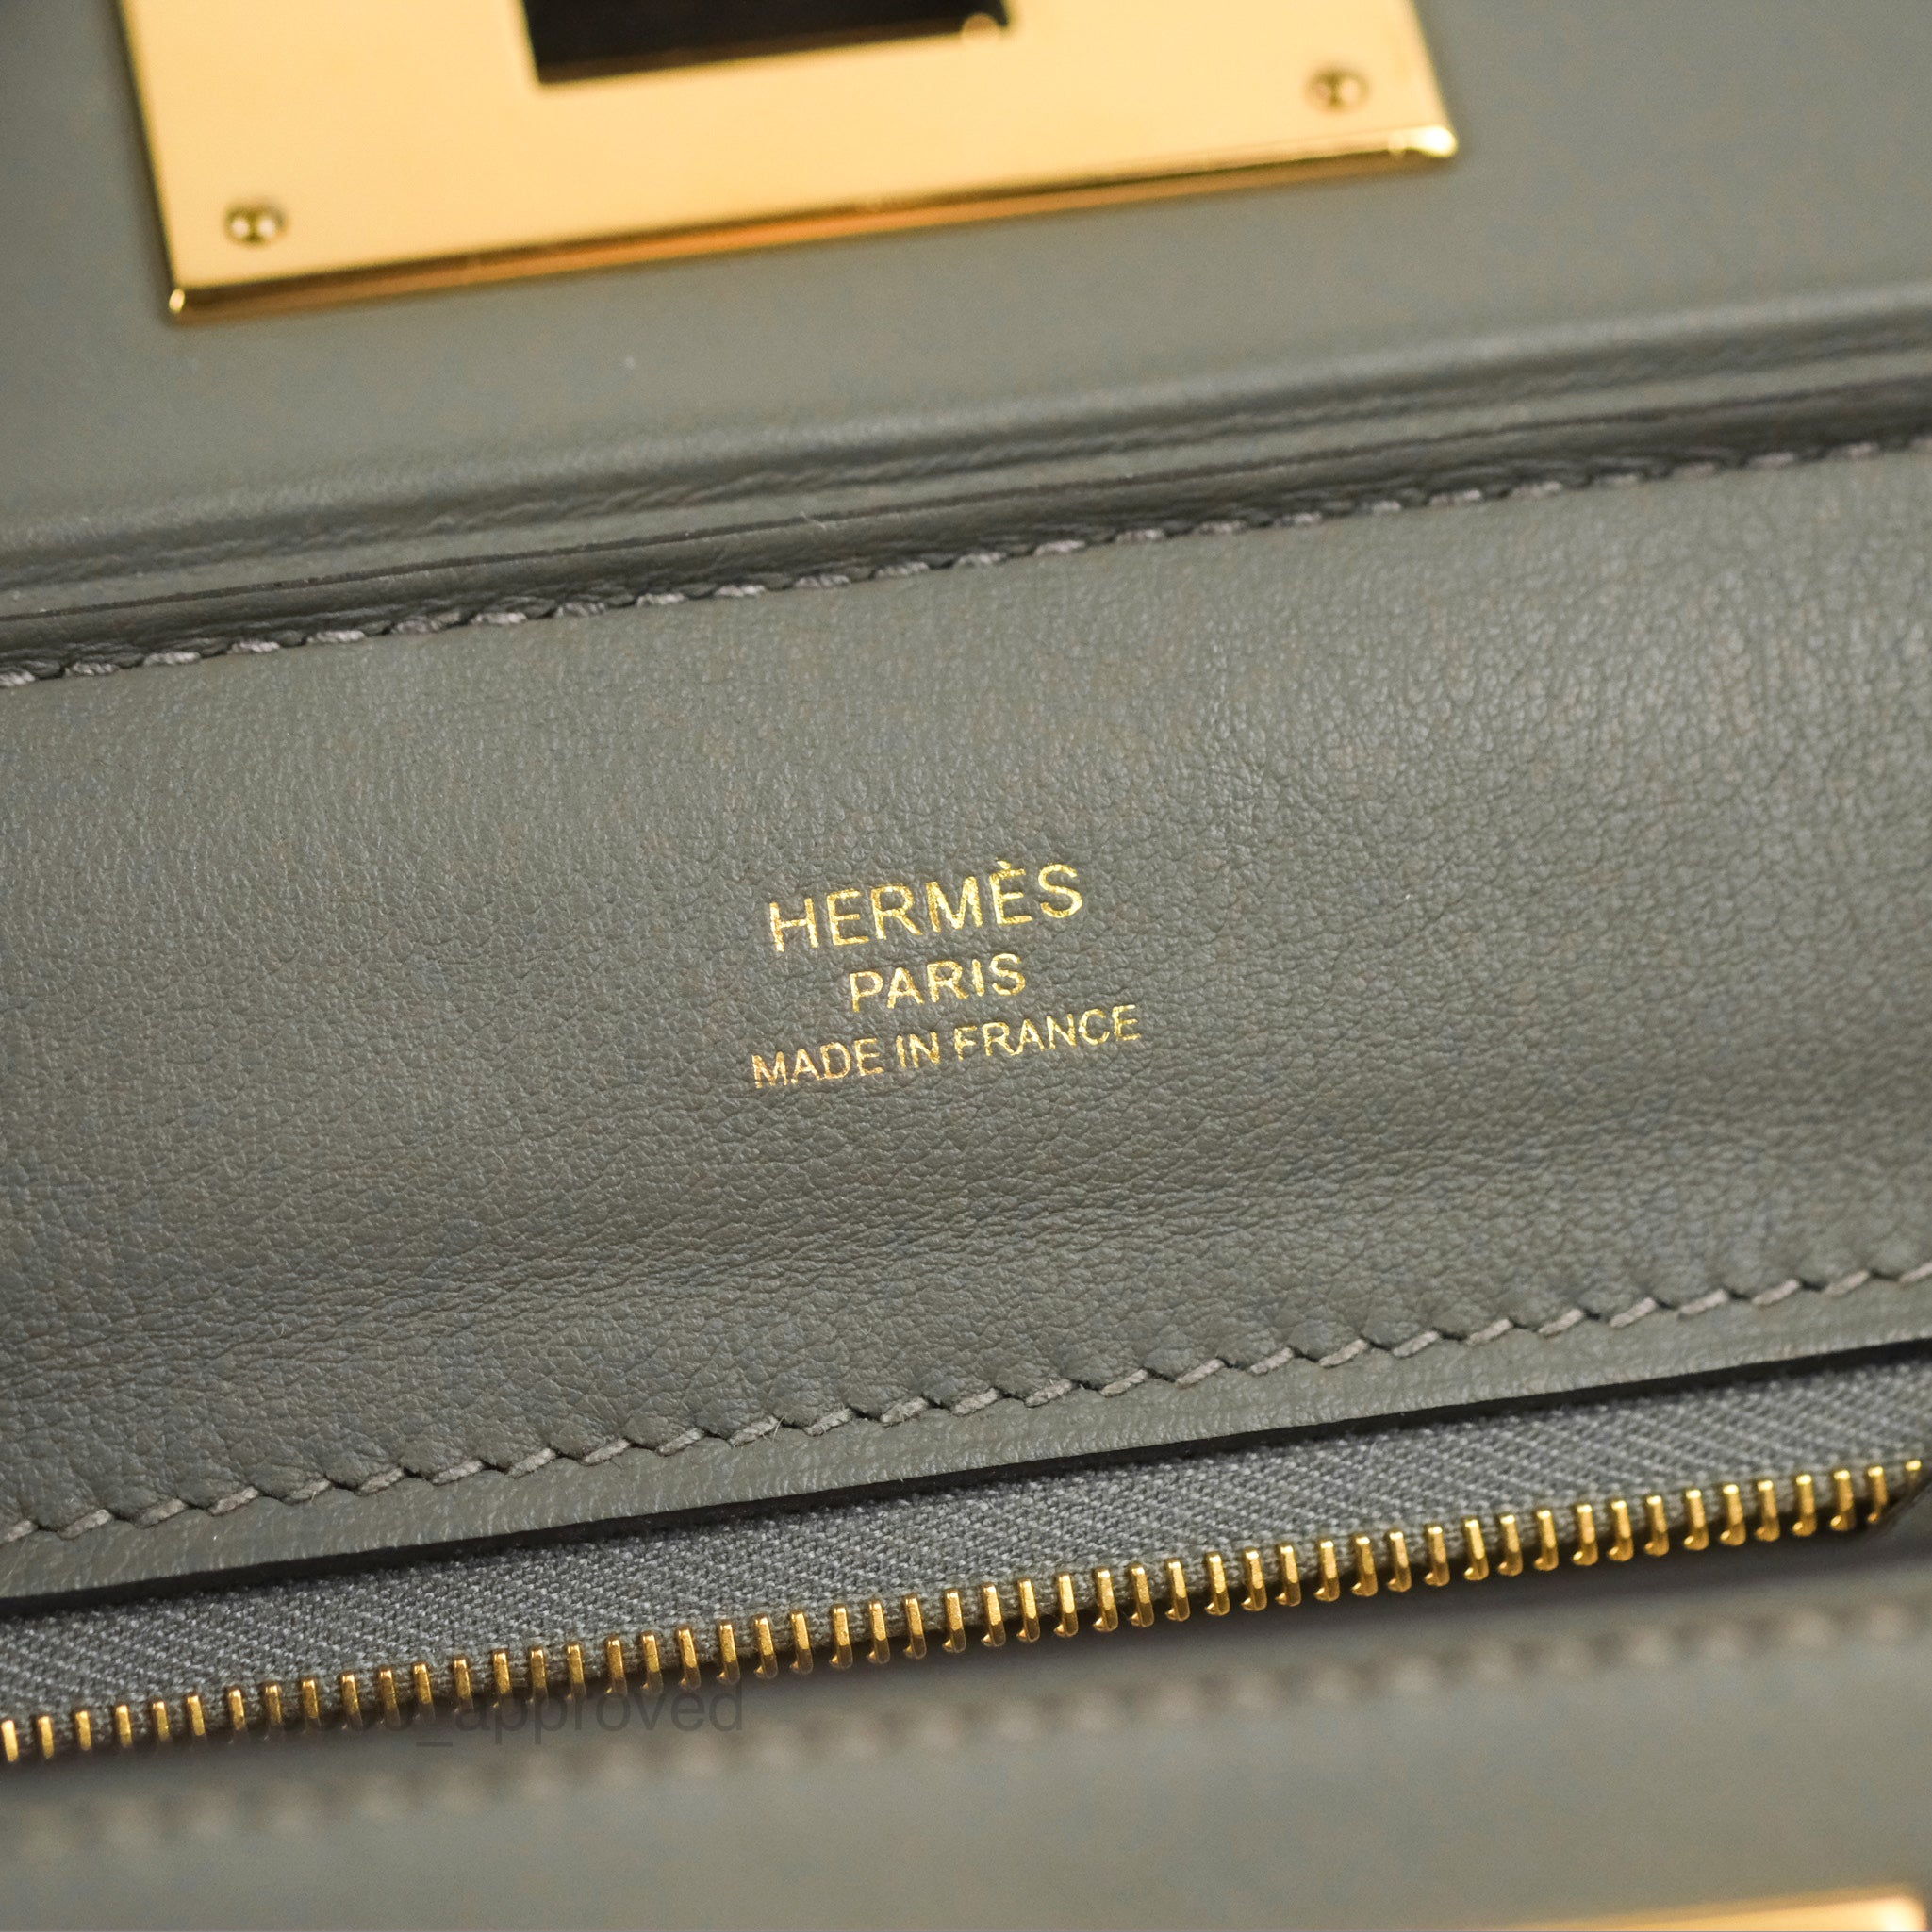 Hermès Mini 24/24 gris meyer with gold hardware - HERMÈS